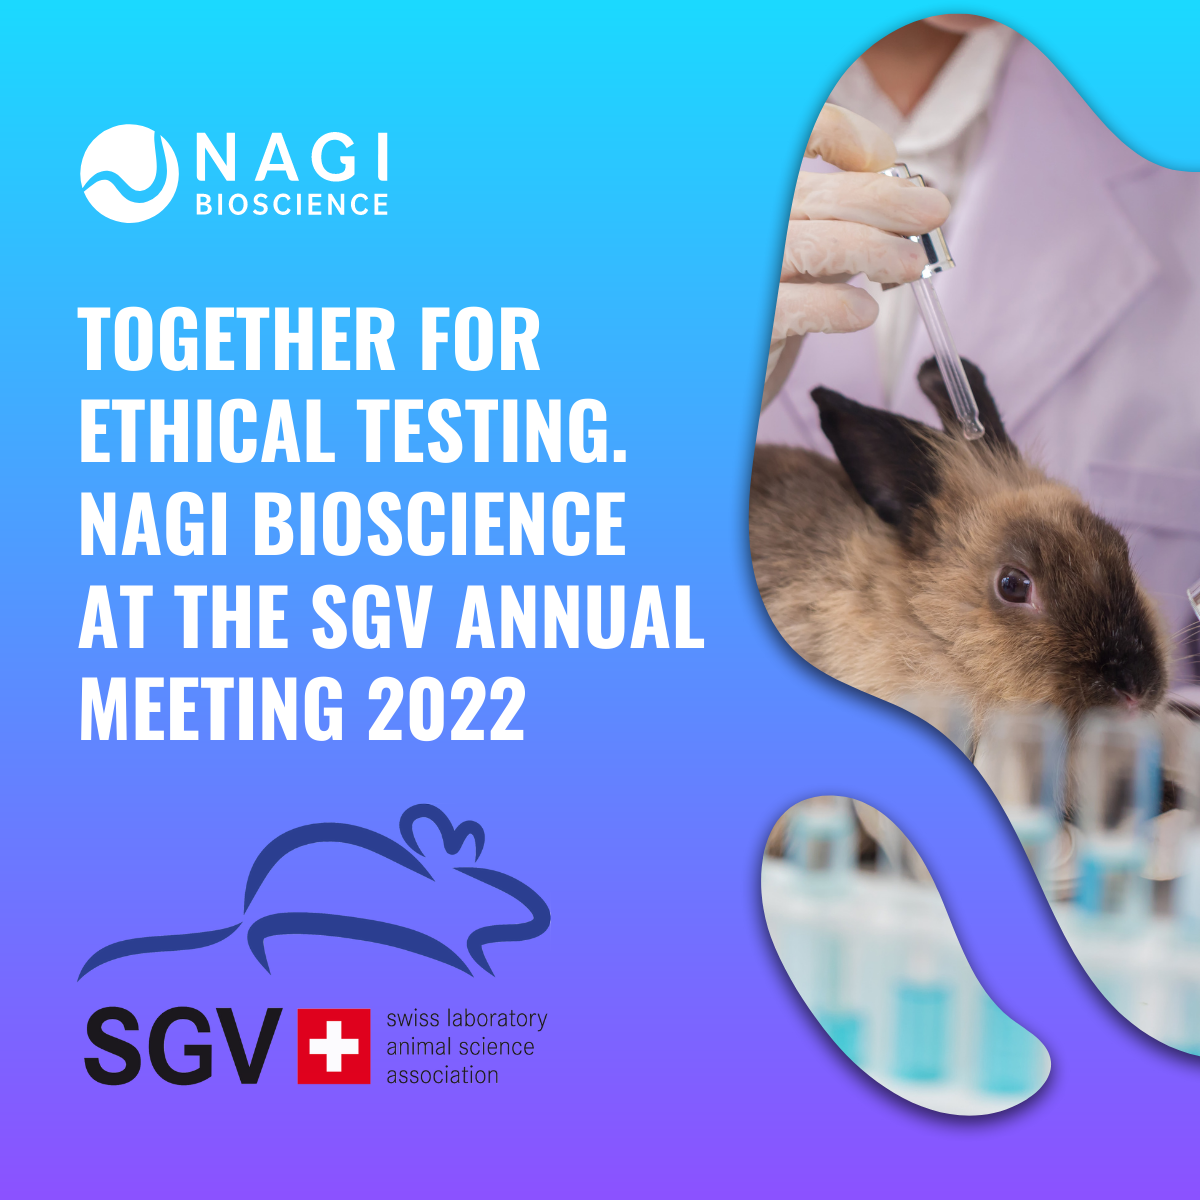 Nagi at SGV meeting 2022 for ethical testing